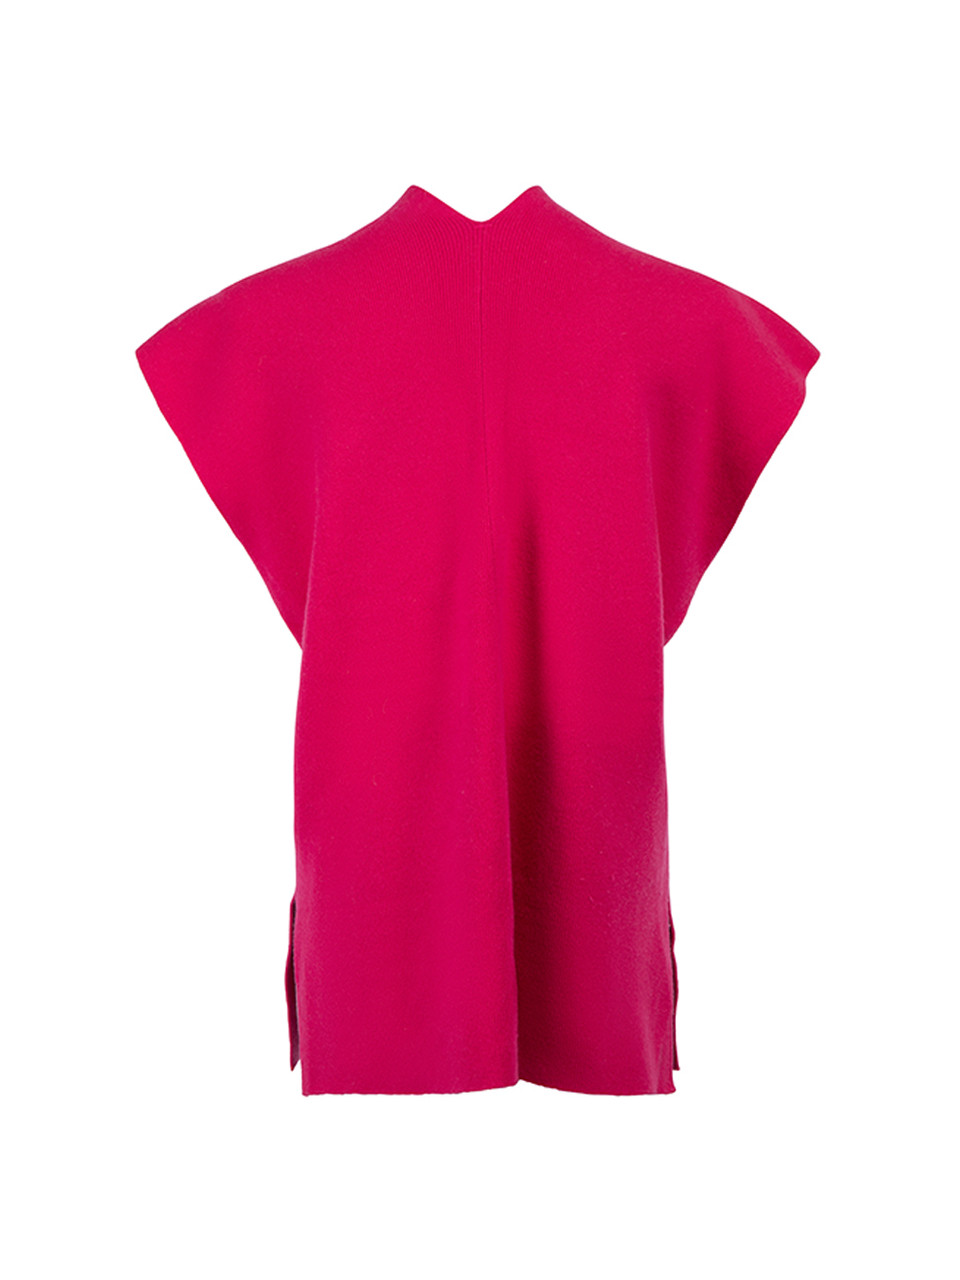 Michael Kors Pink Cashmere Sleeveless Knit Top